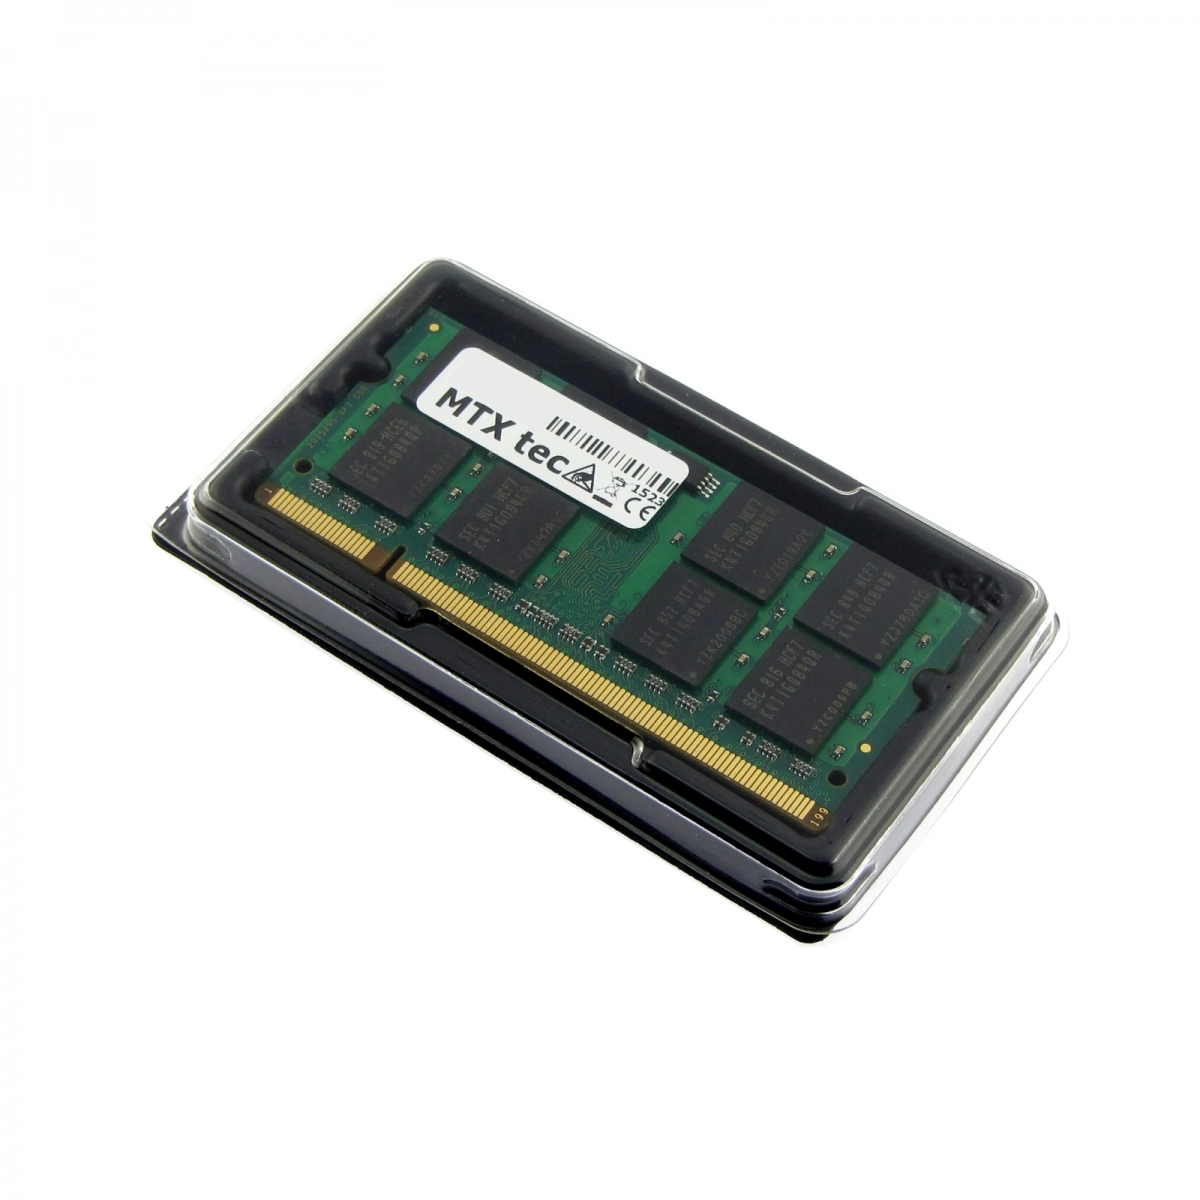 MTXtec Arbeitsspeicher 1 GB RAM für LENOVO ThinkPad T43 (2678)